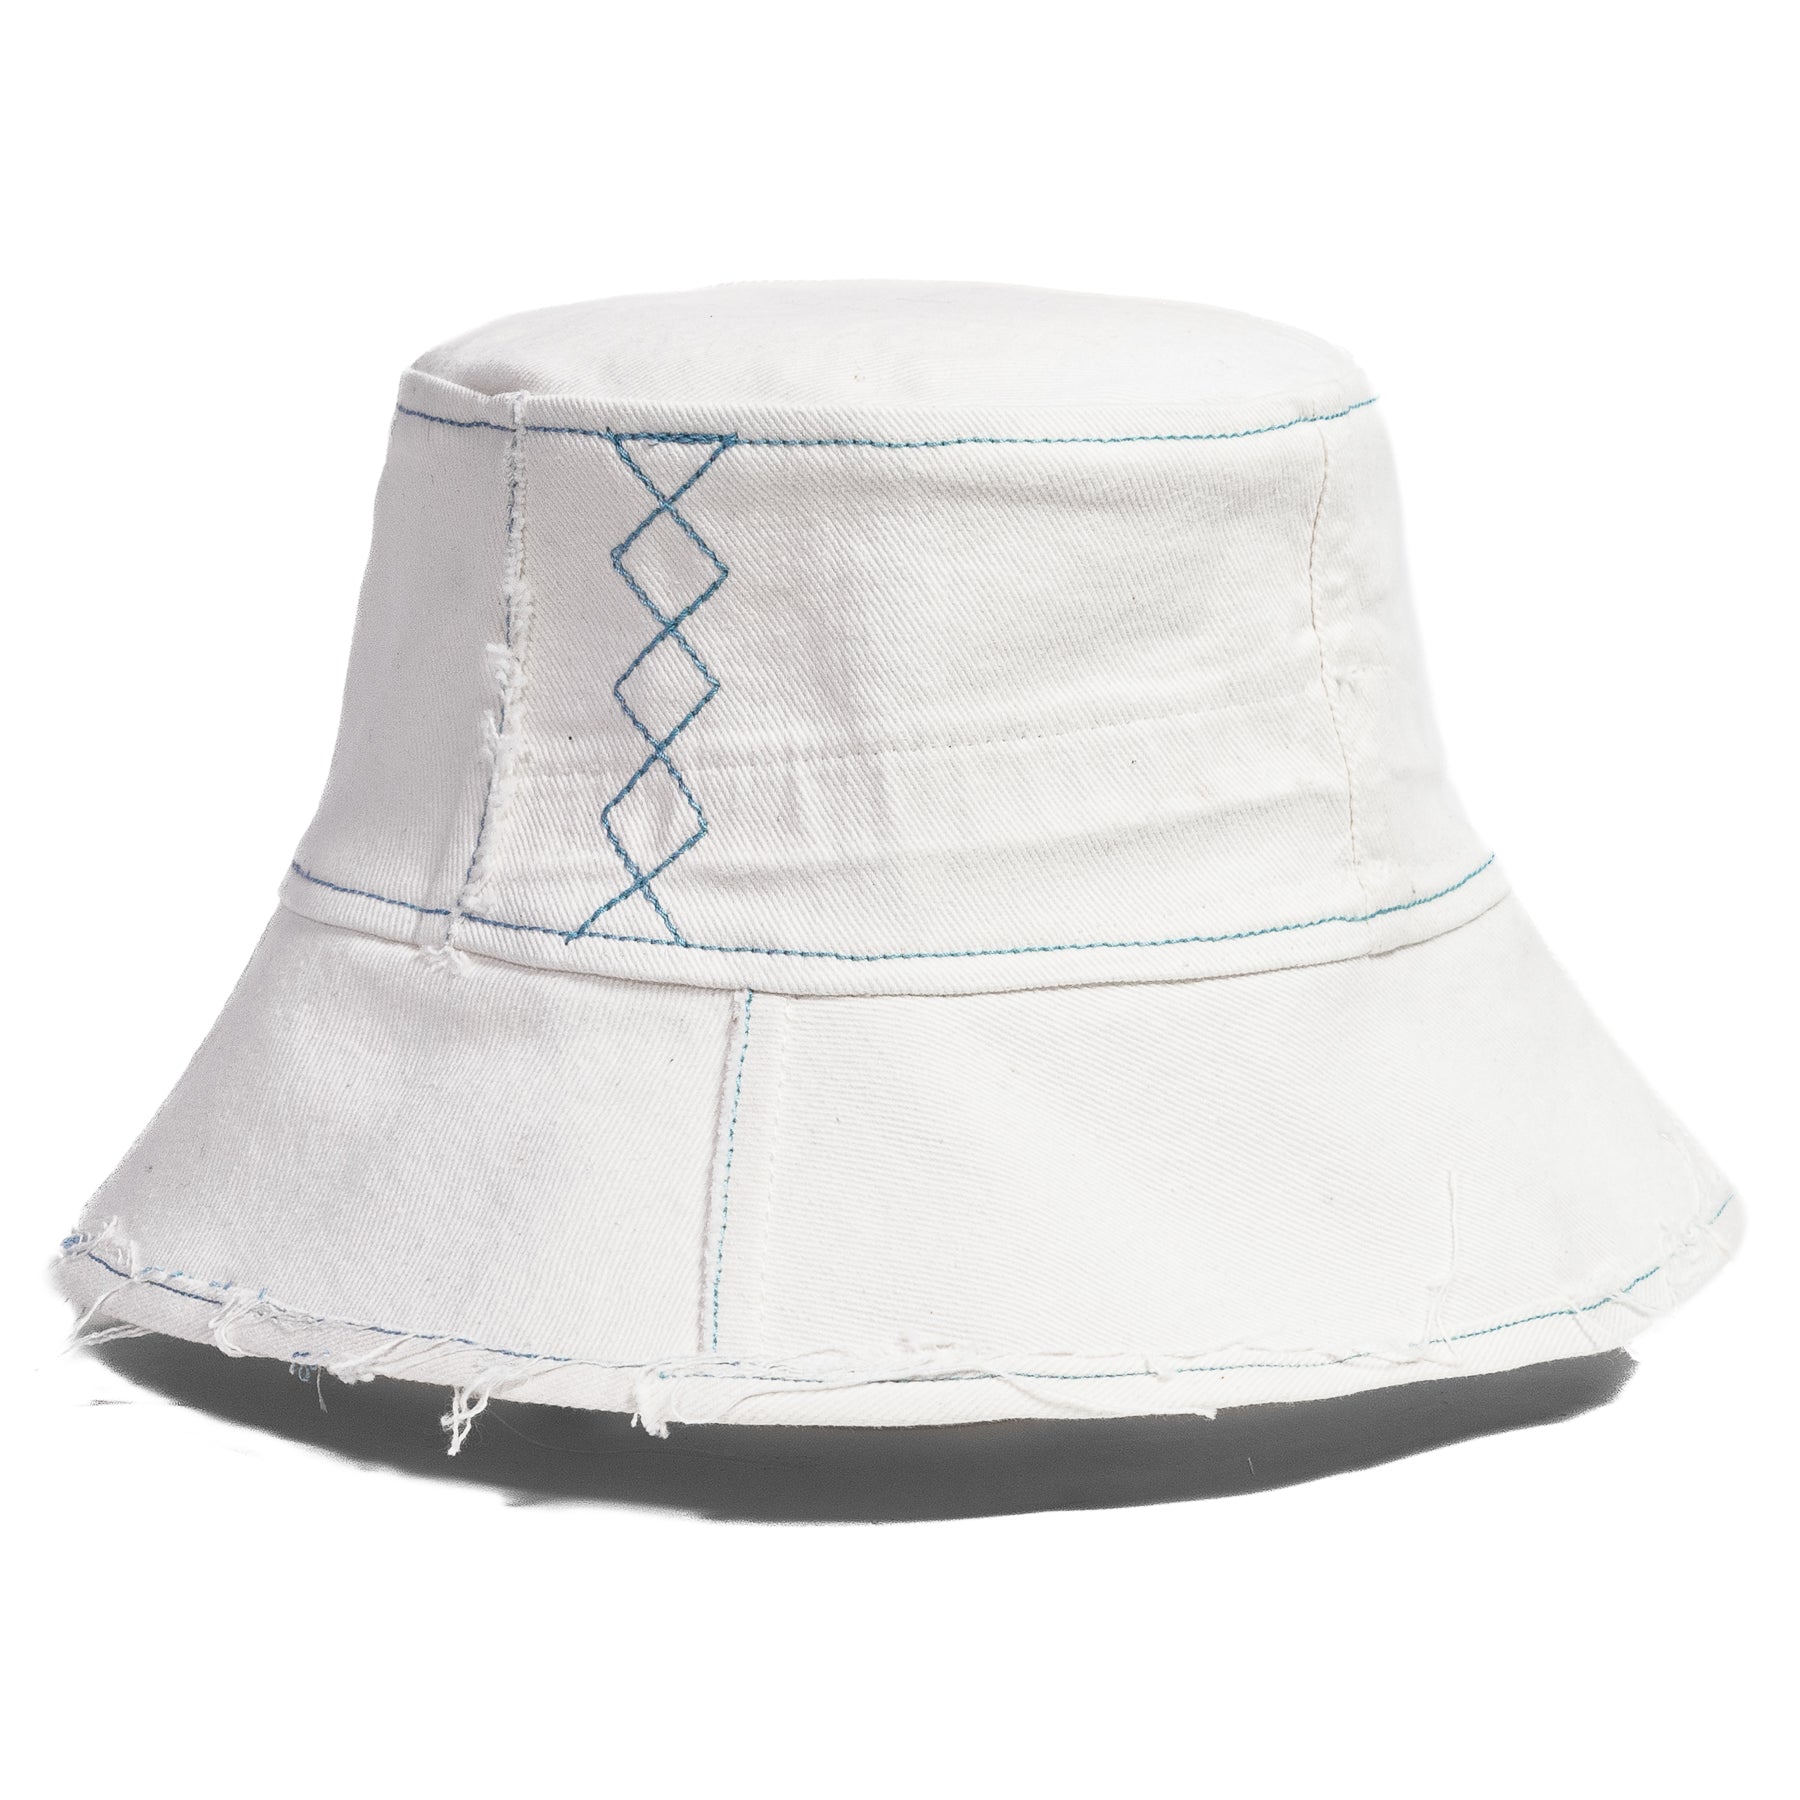 Mursaki Denim Chop Shop Bucket Hat - White/Snake